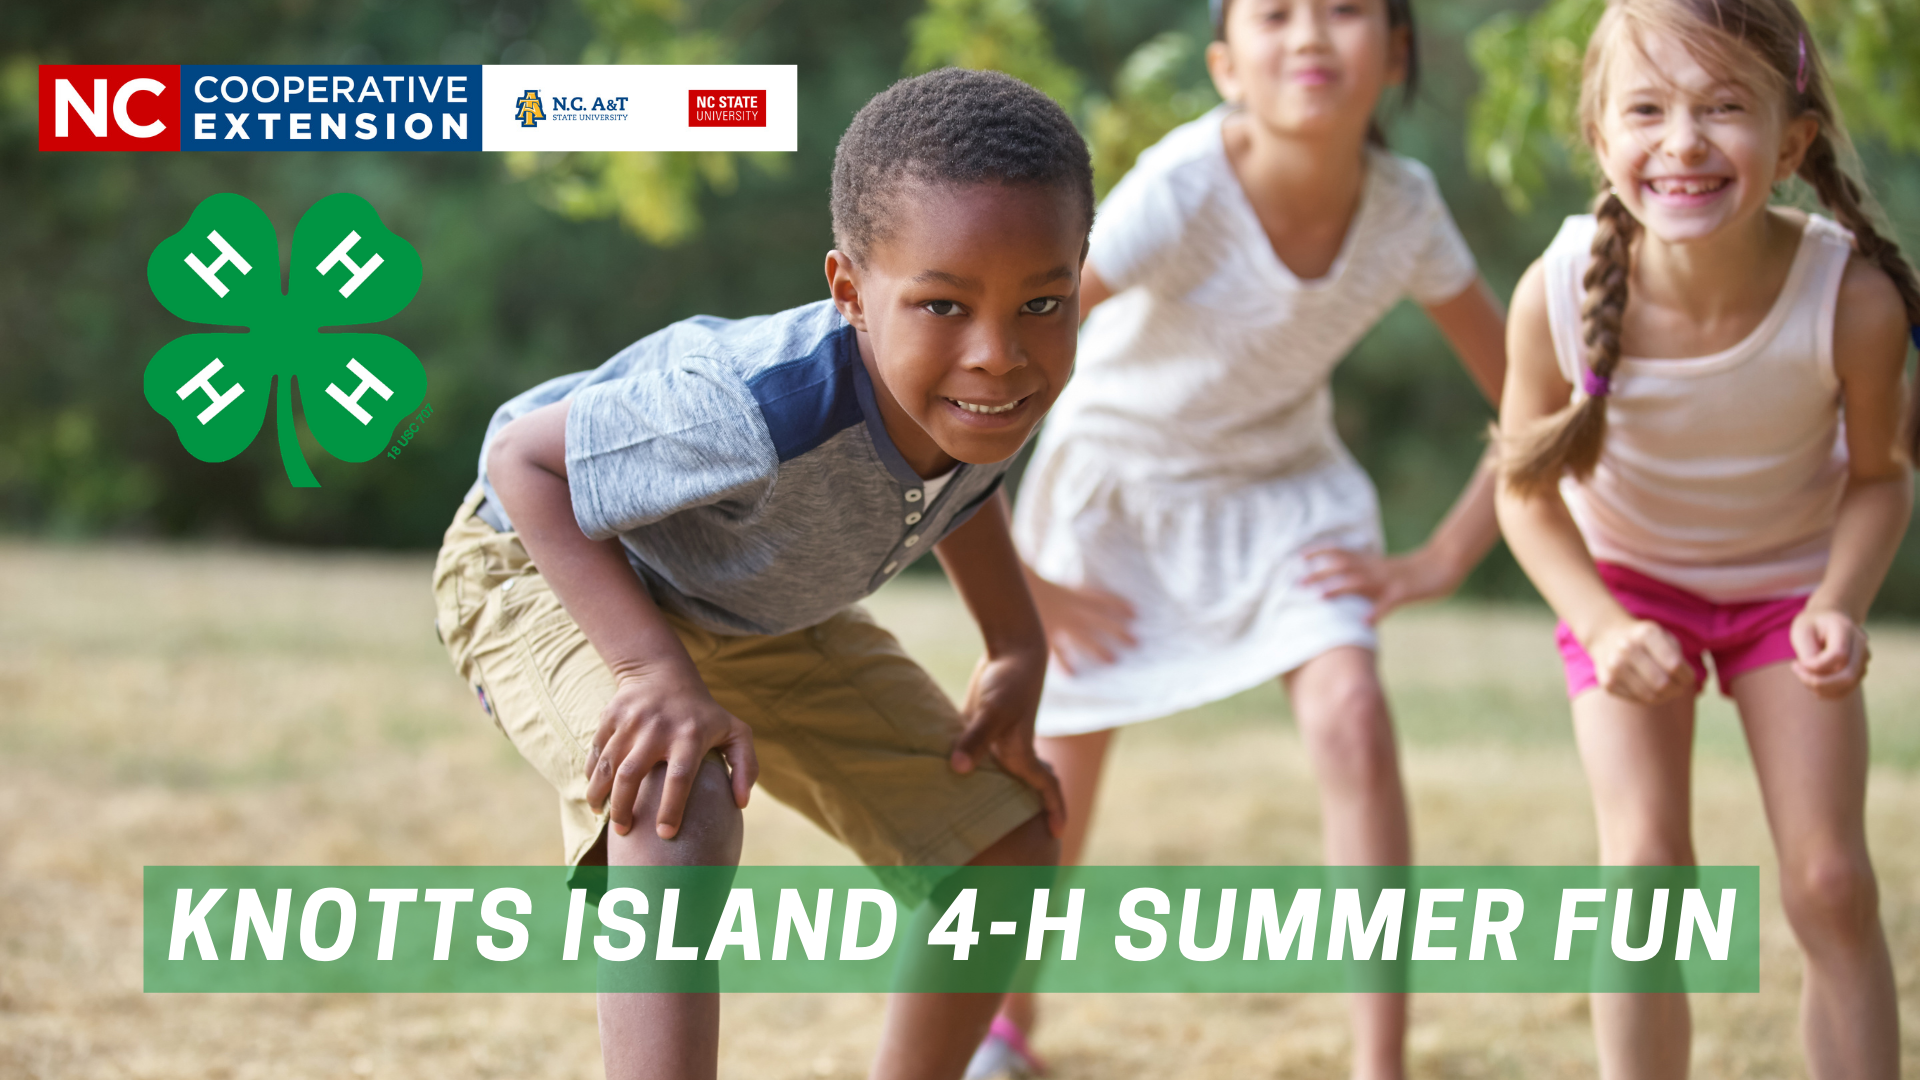 Knotts Island 4-H Summer Fun